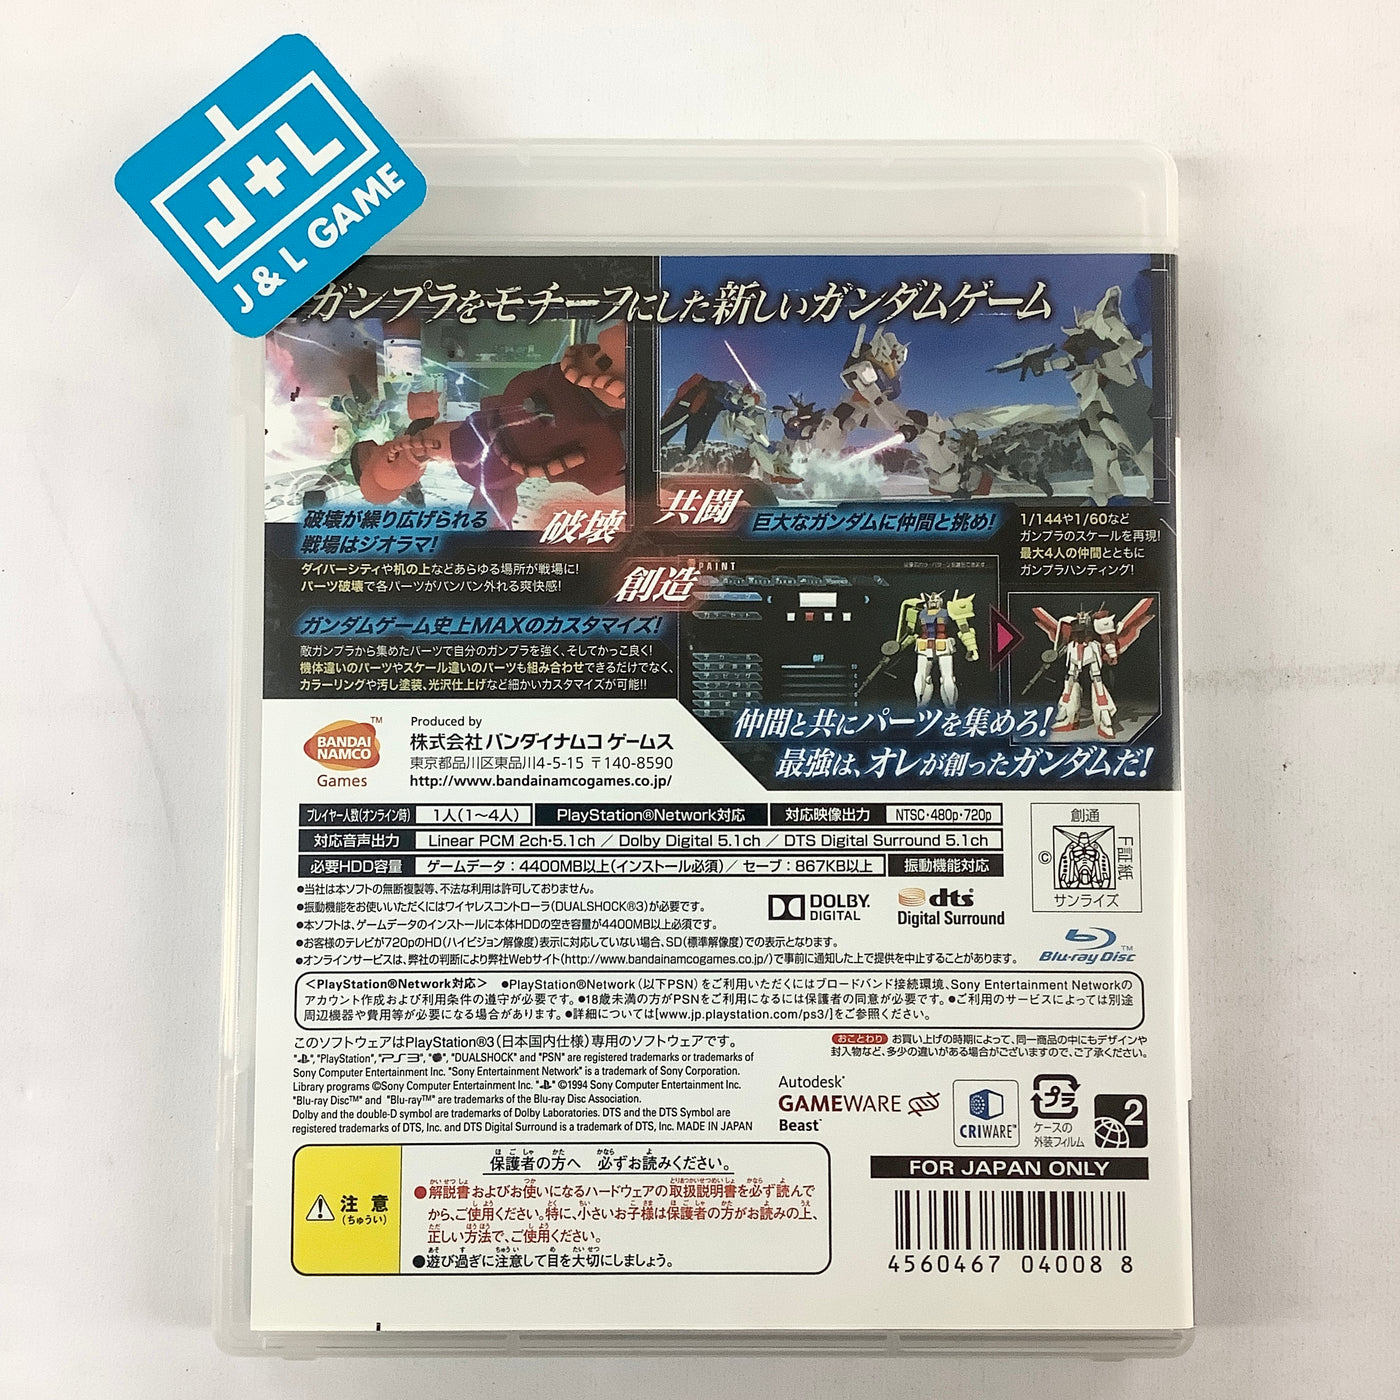 Gundam Breaker - (PS3) PlayStation 3 [Pre-Owned] (Japanese Import) Video Games Bandai Namco Games   